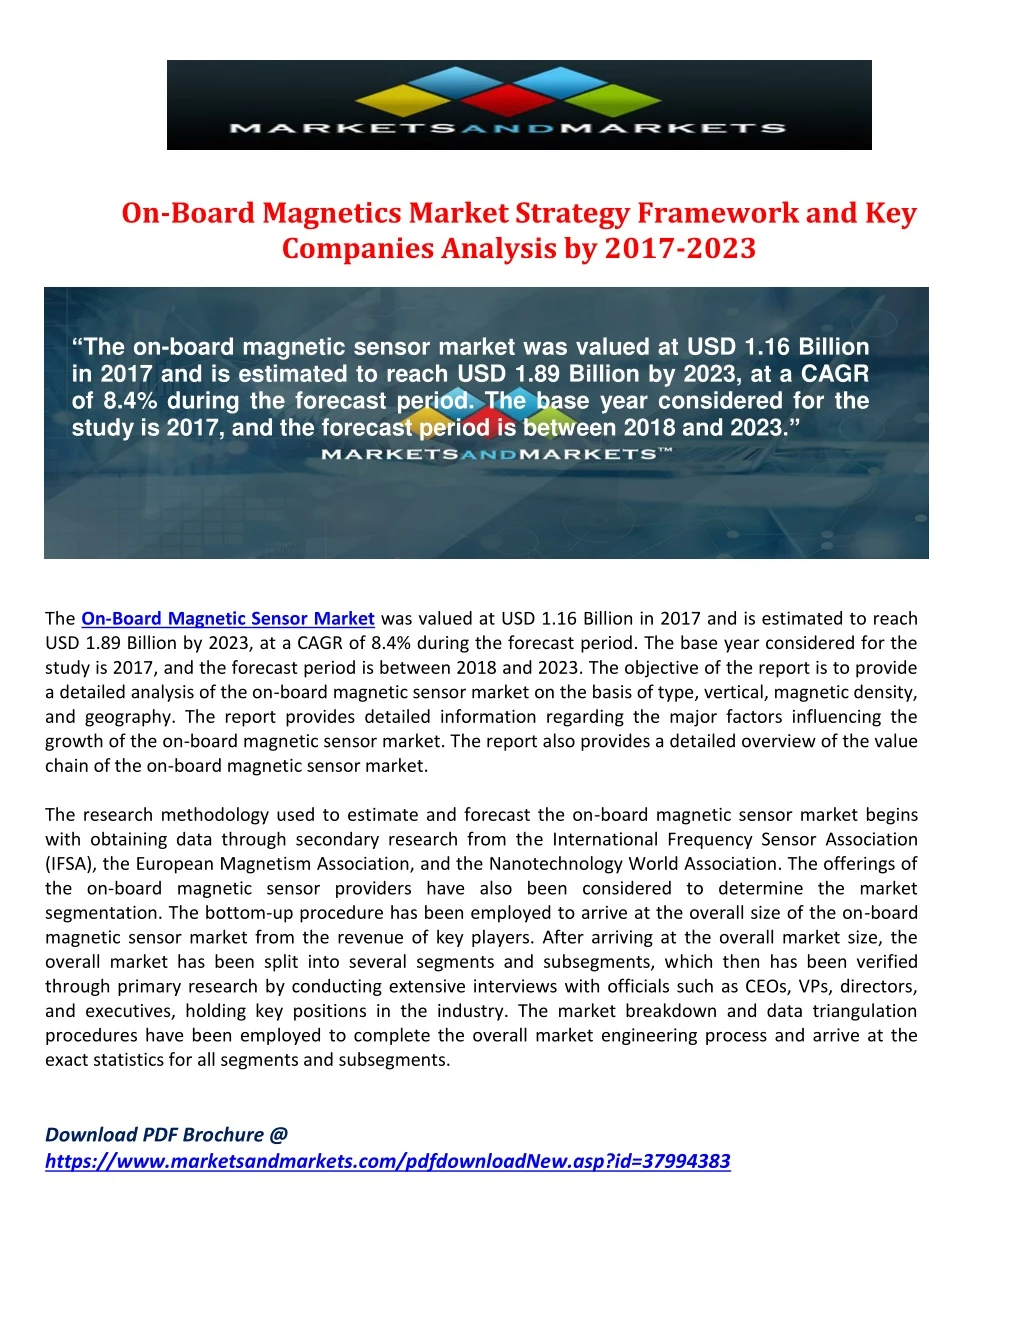 on board magnetics market strategy framework